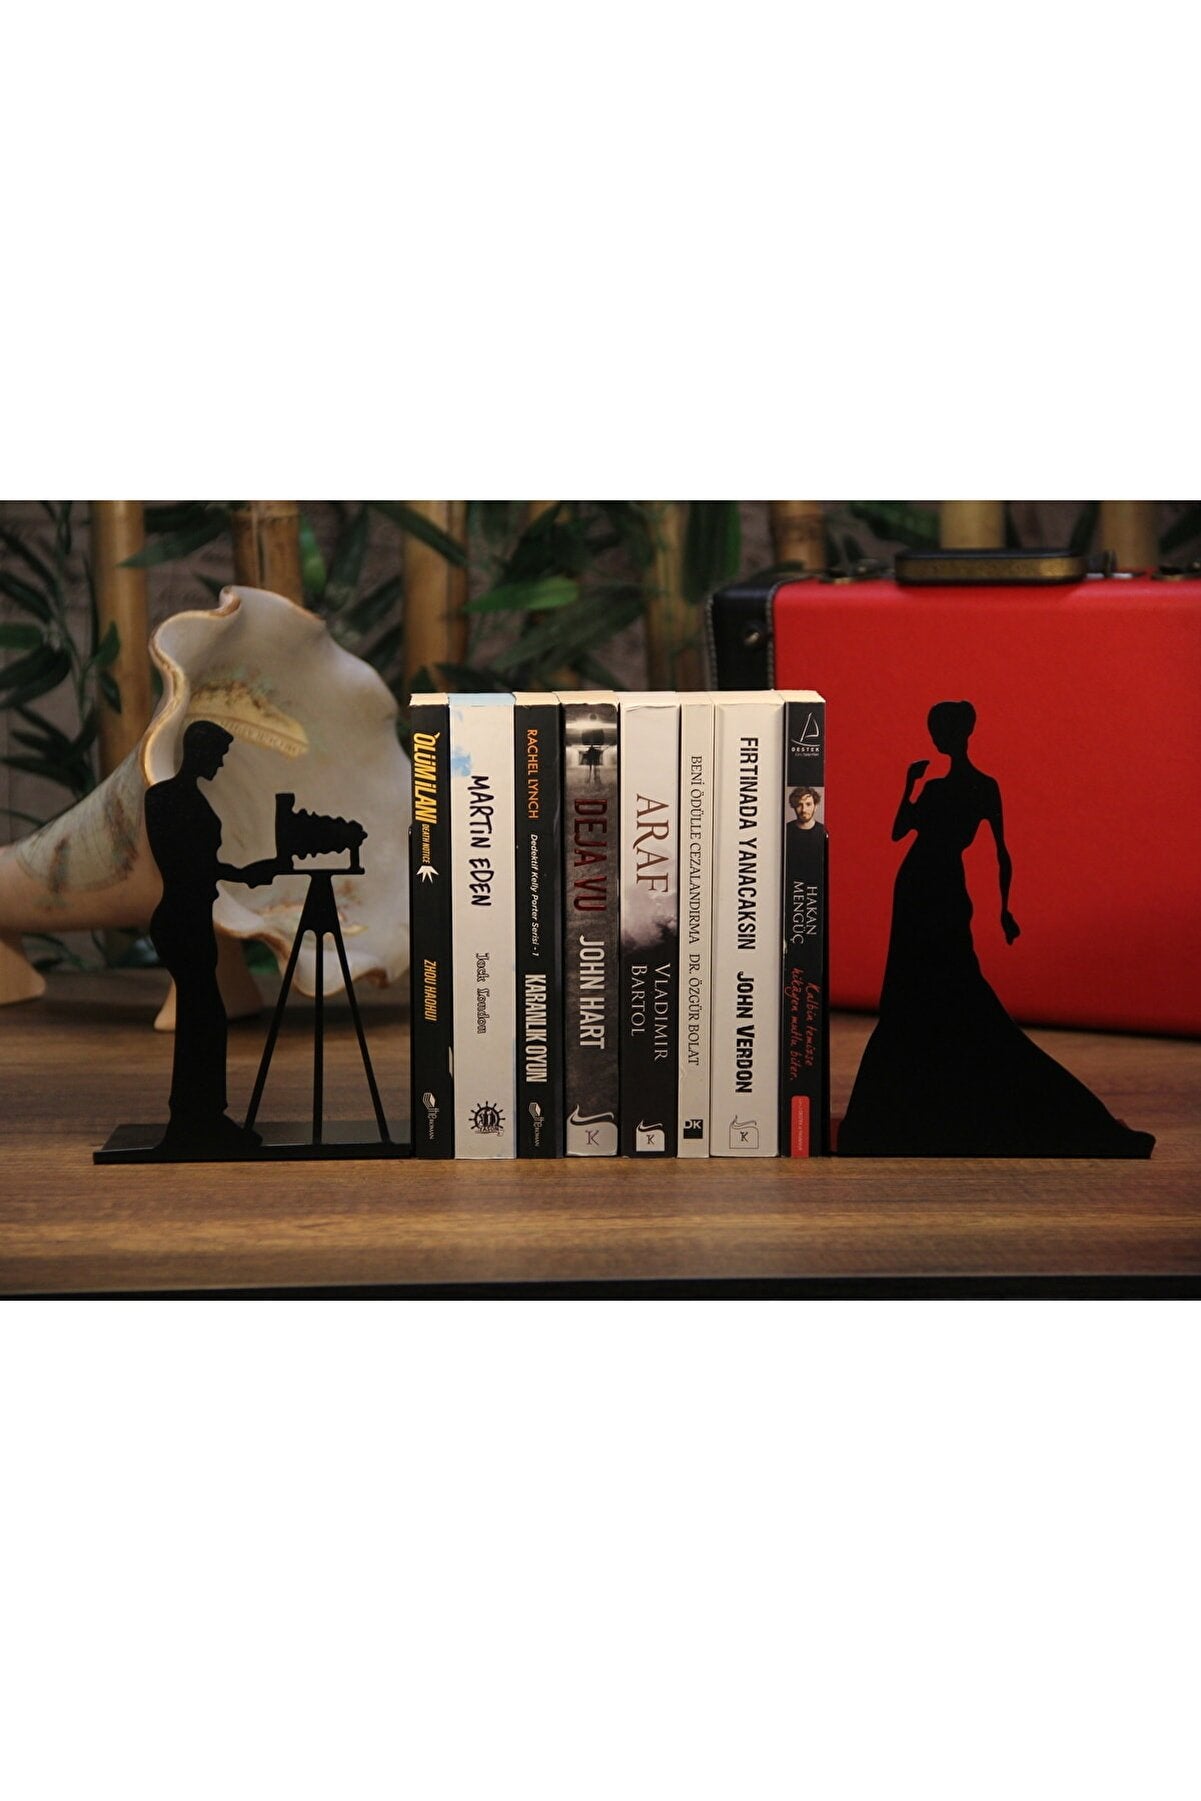 Figured Decorative Metal Book Holder, Book Support, Book Organizer, Gift Black cat, Bike, Elephant Ballerina, Giraffe, Reading